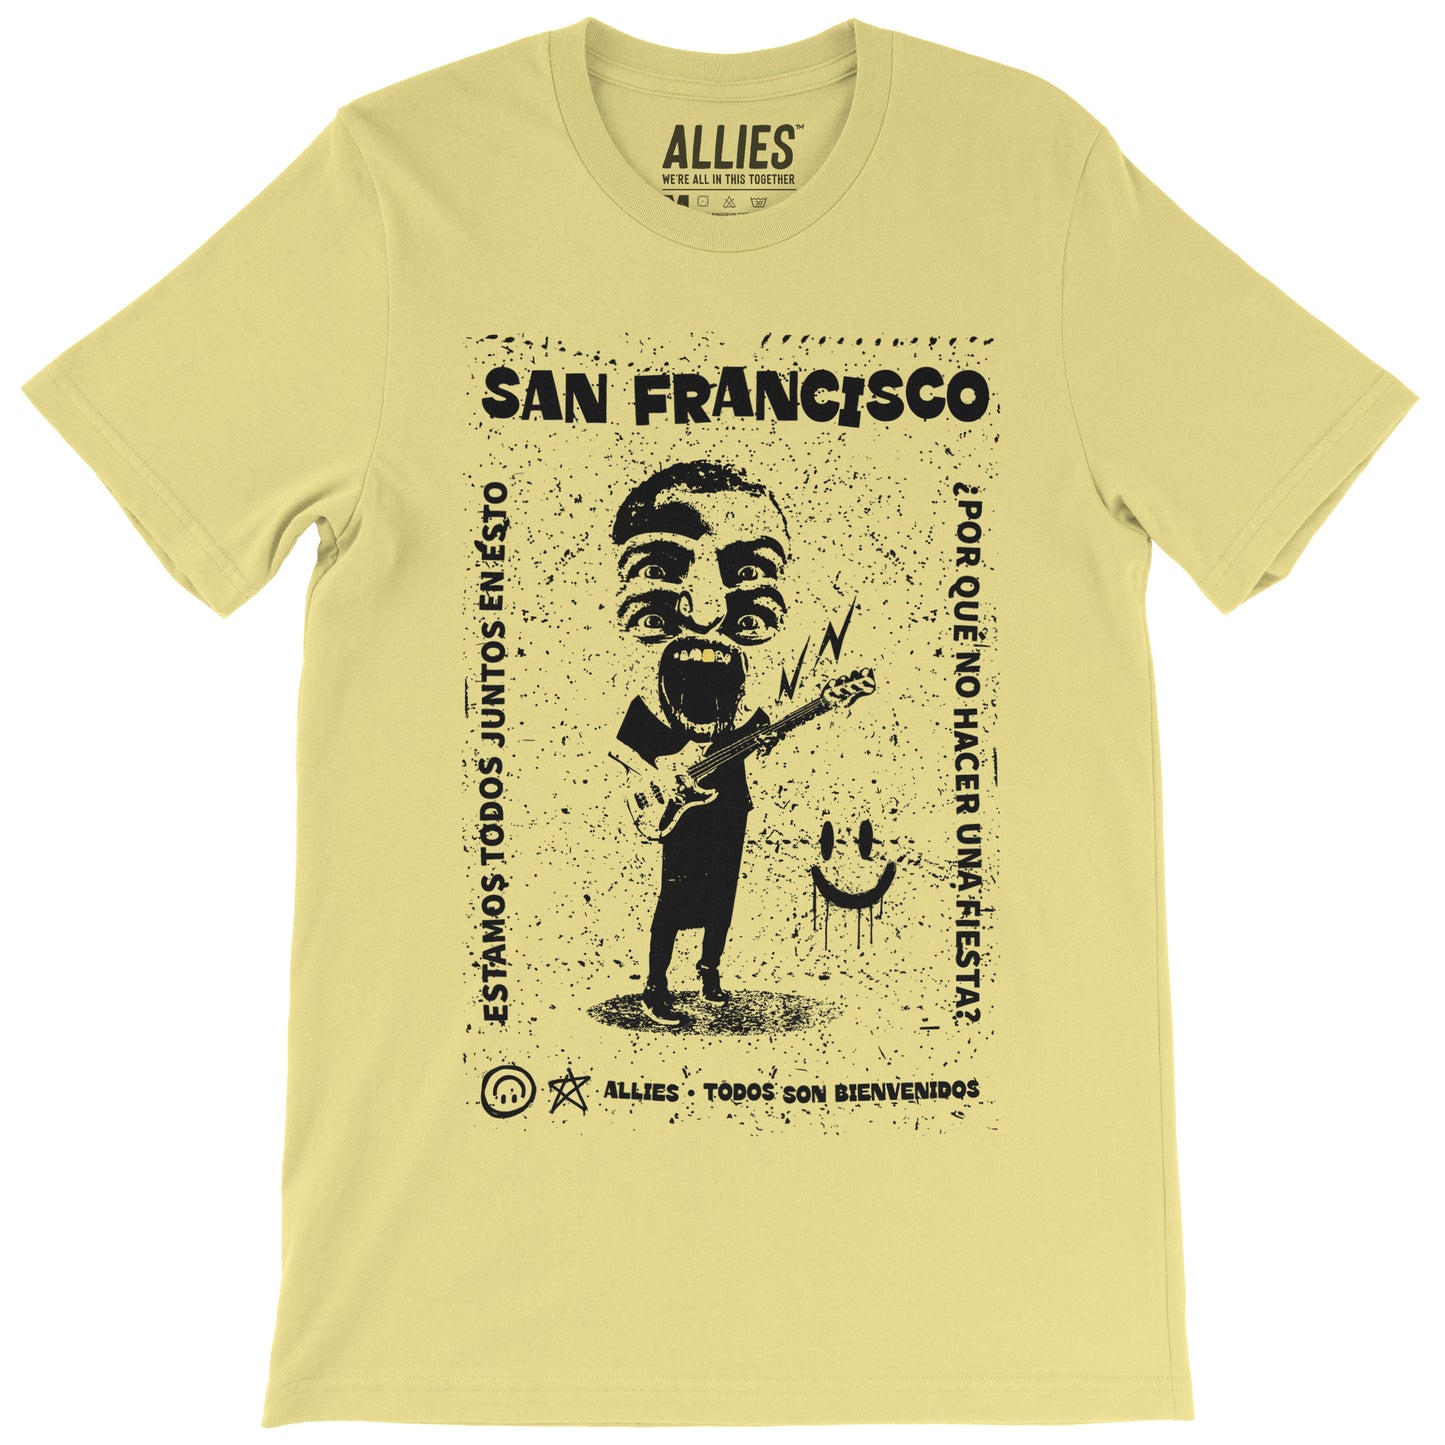 San Francisco Punk T-shirt